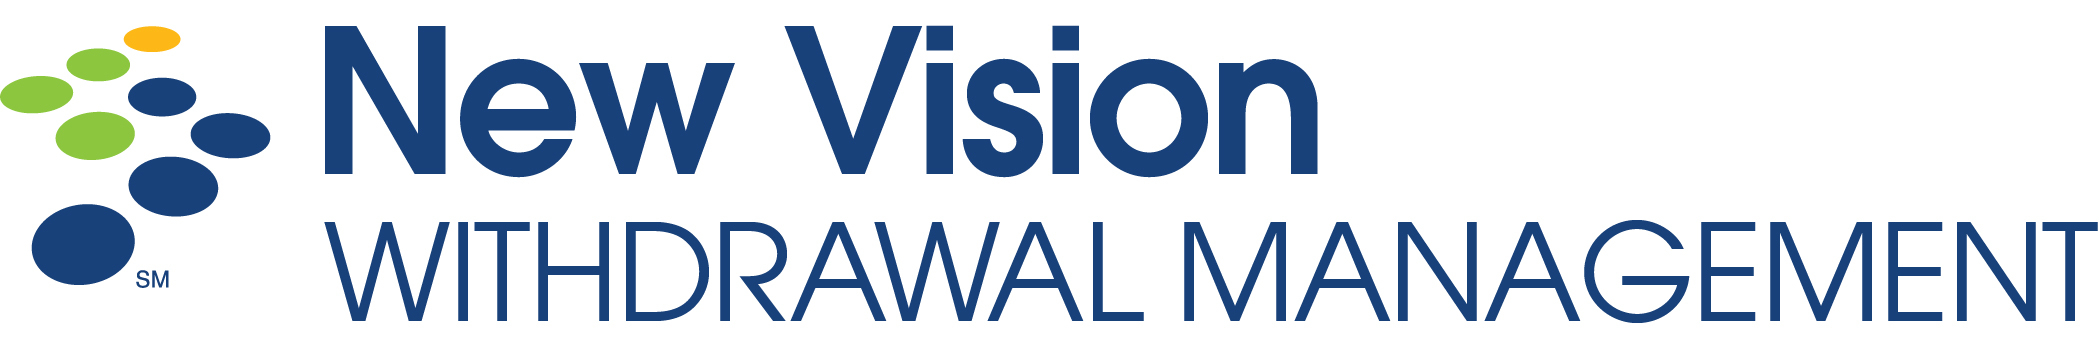 New Vision Logo